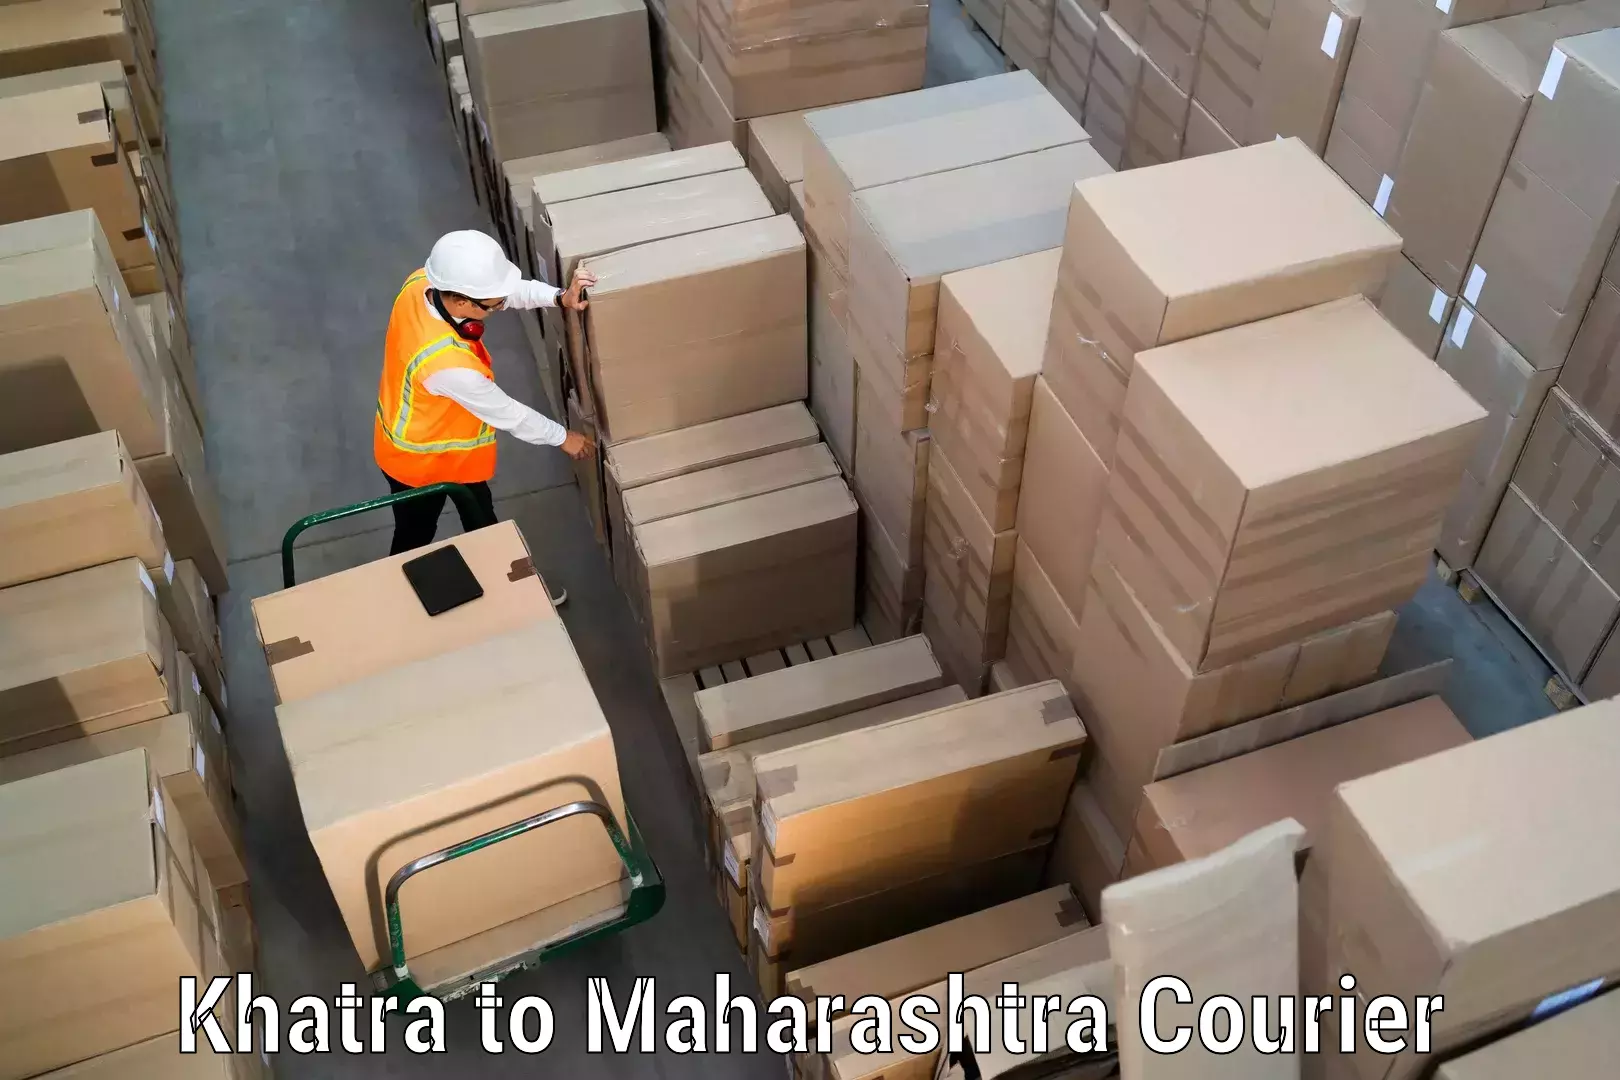 High-capacity parcel service Khatra to Lonar